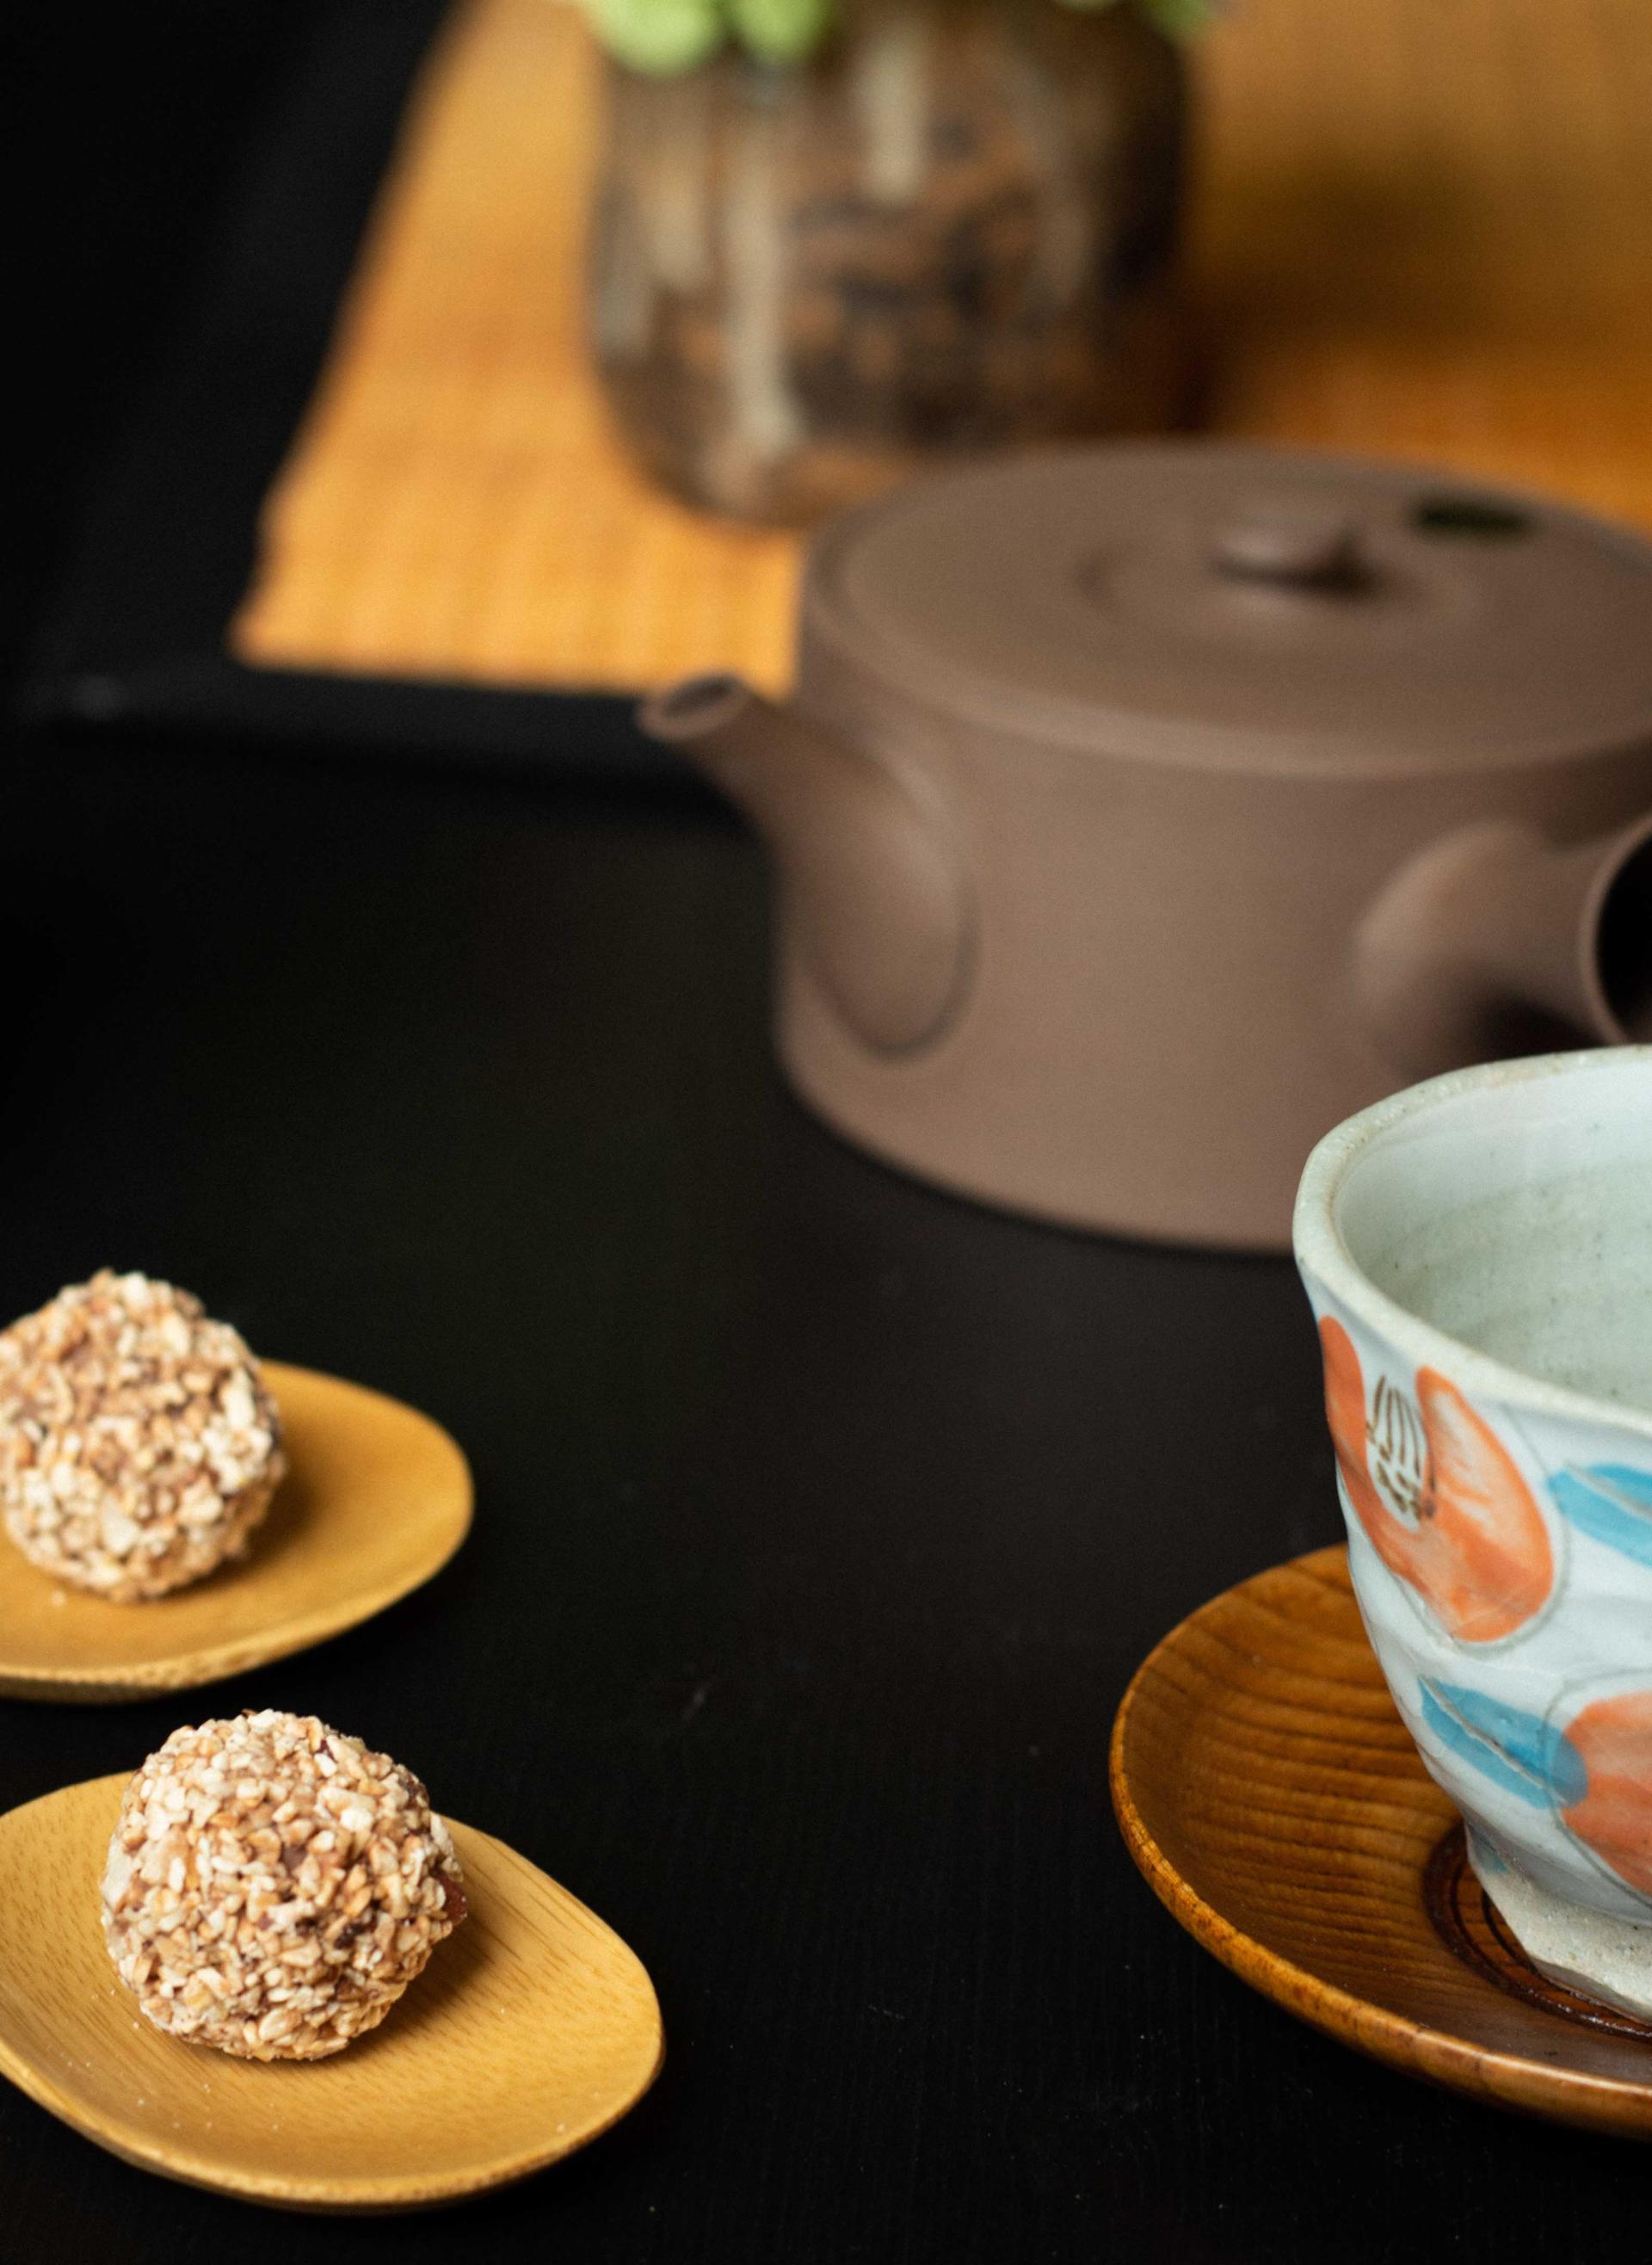 Kyusu-teapot, cylindric, light brown, 420 ml